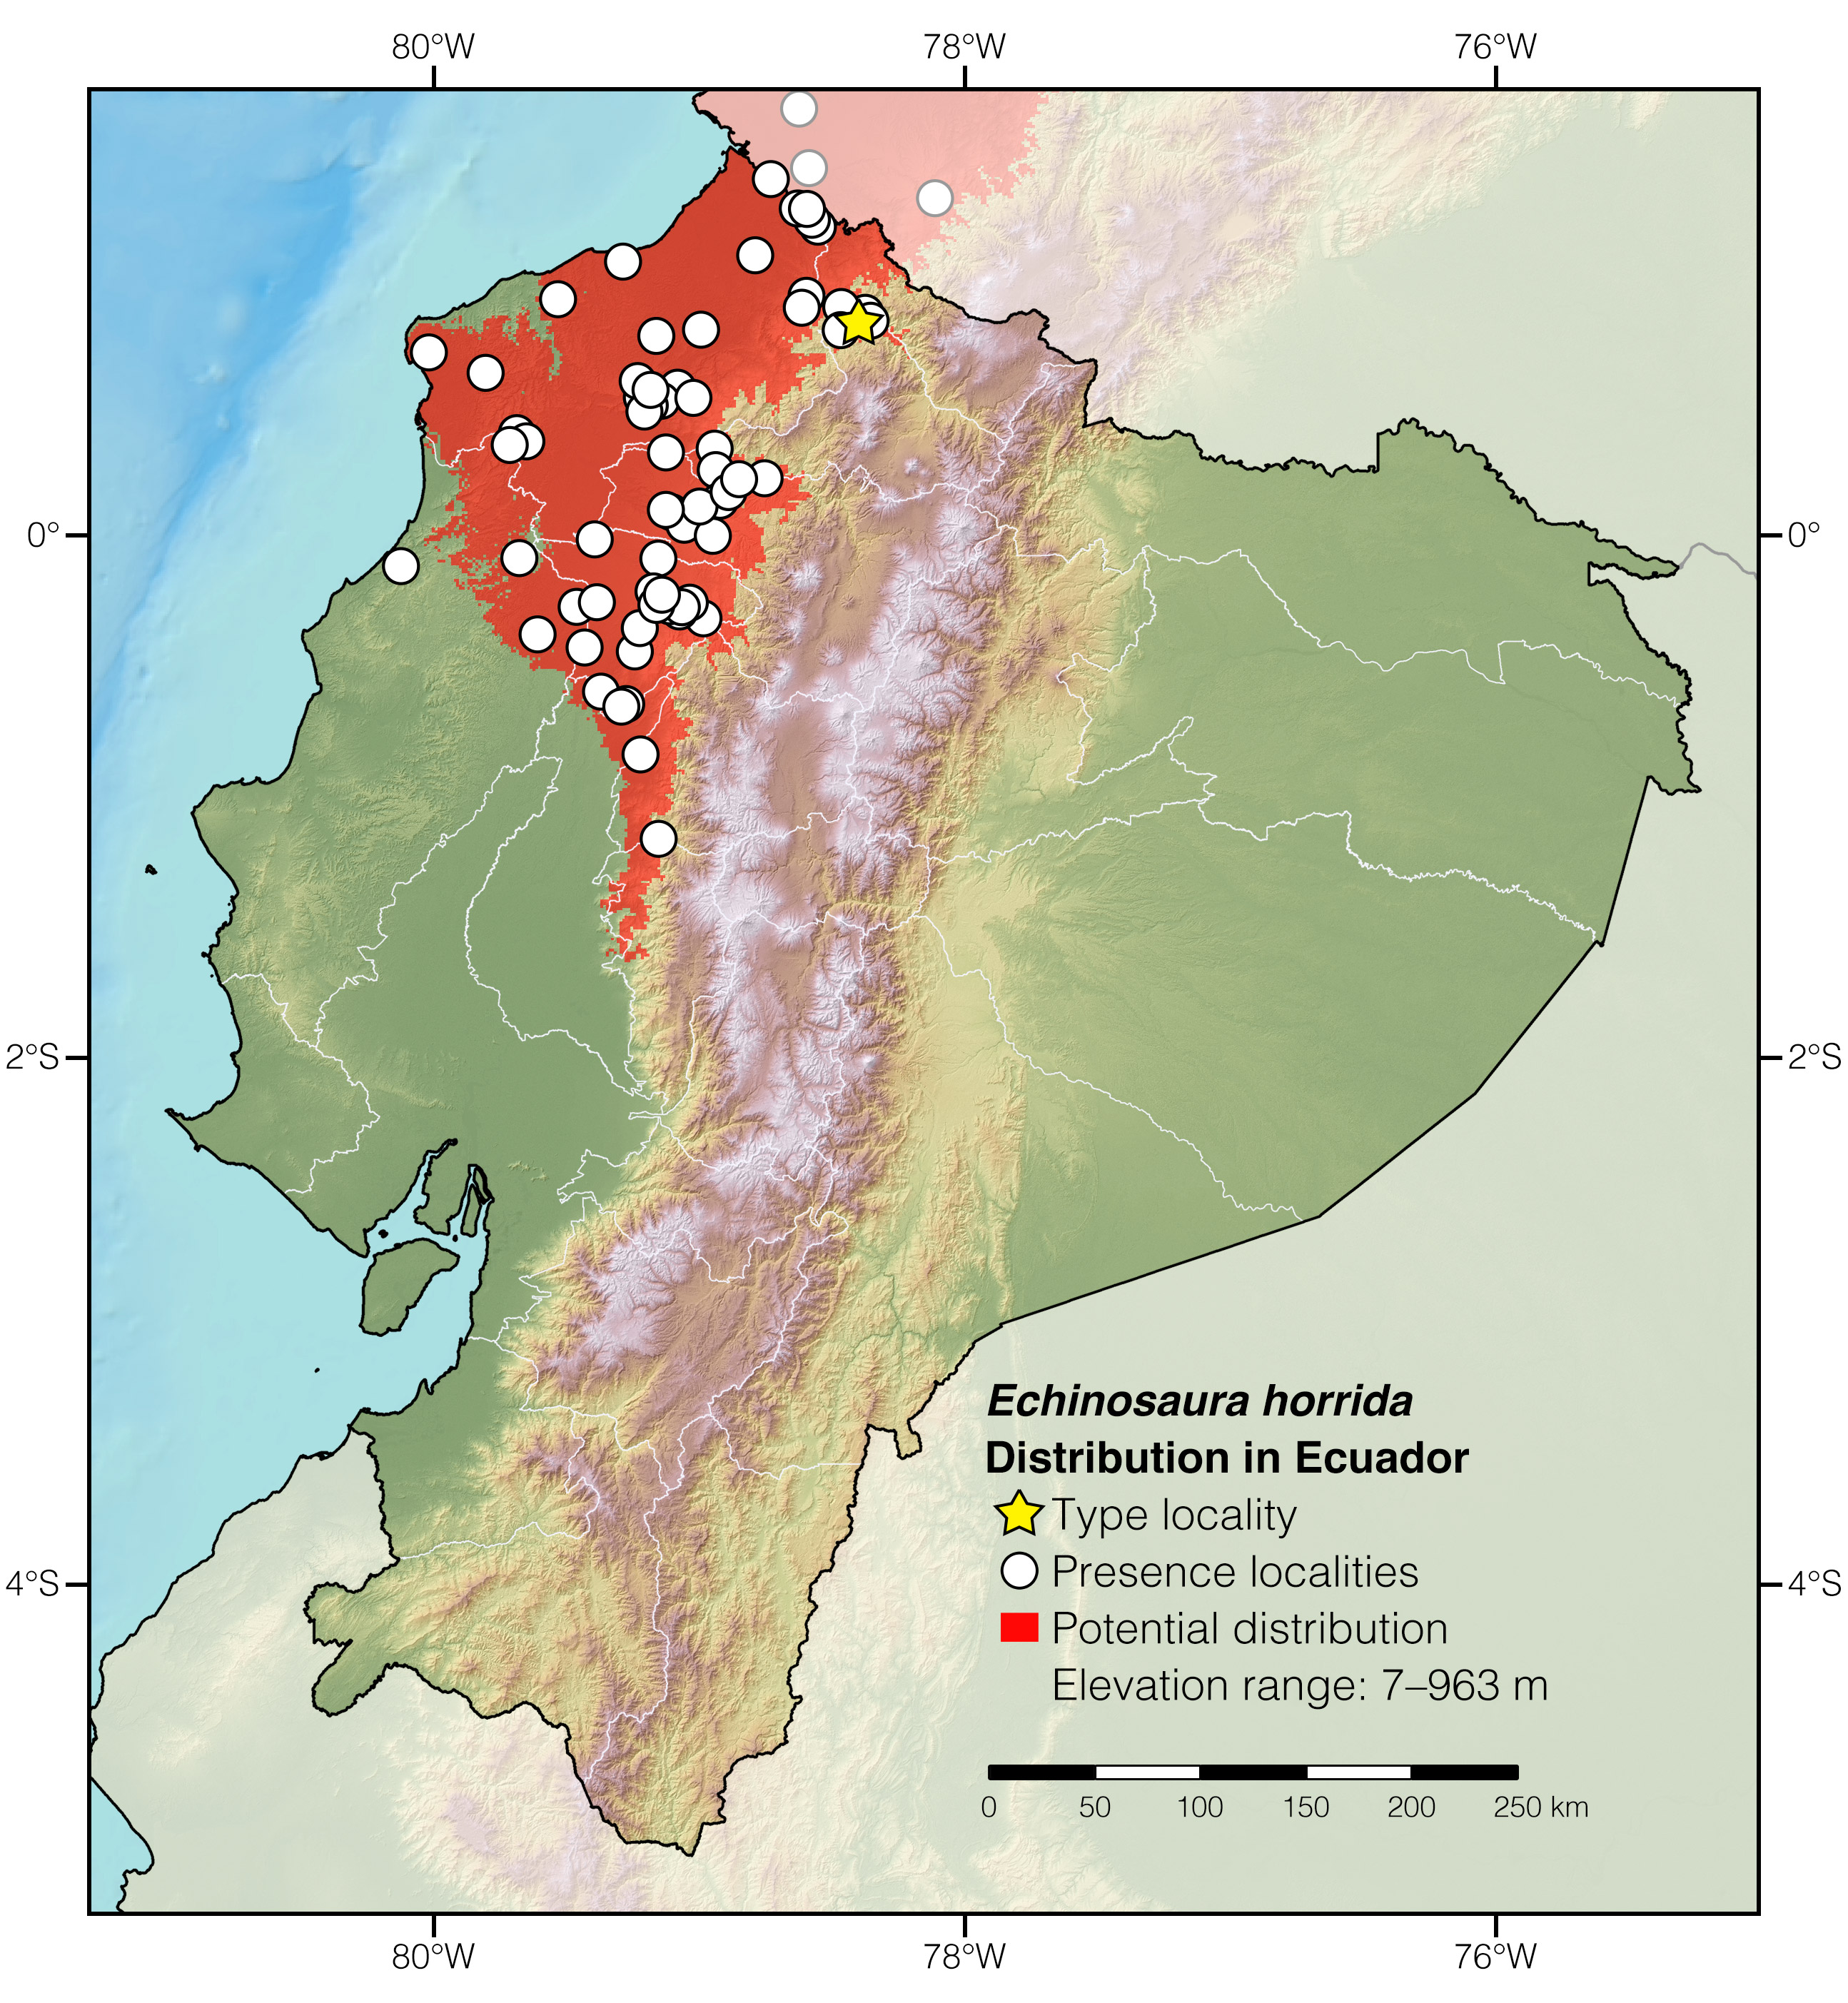 Distribution of Echinosaura horrida in Ecuador